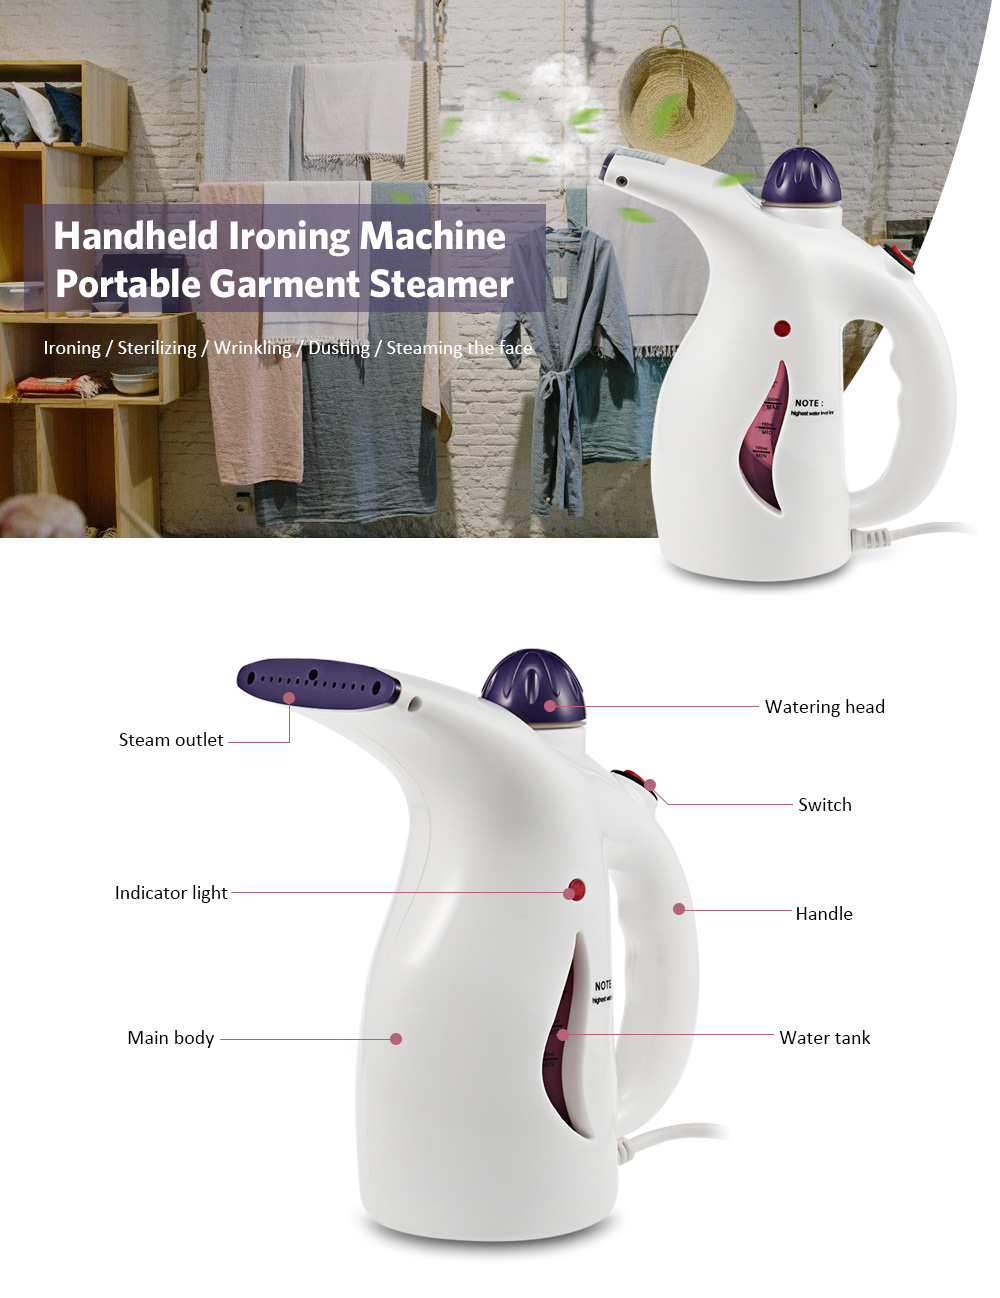 Handheld Ironing Machine Portable Garment Steamer with Brushes